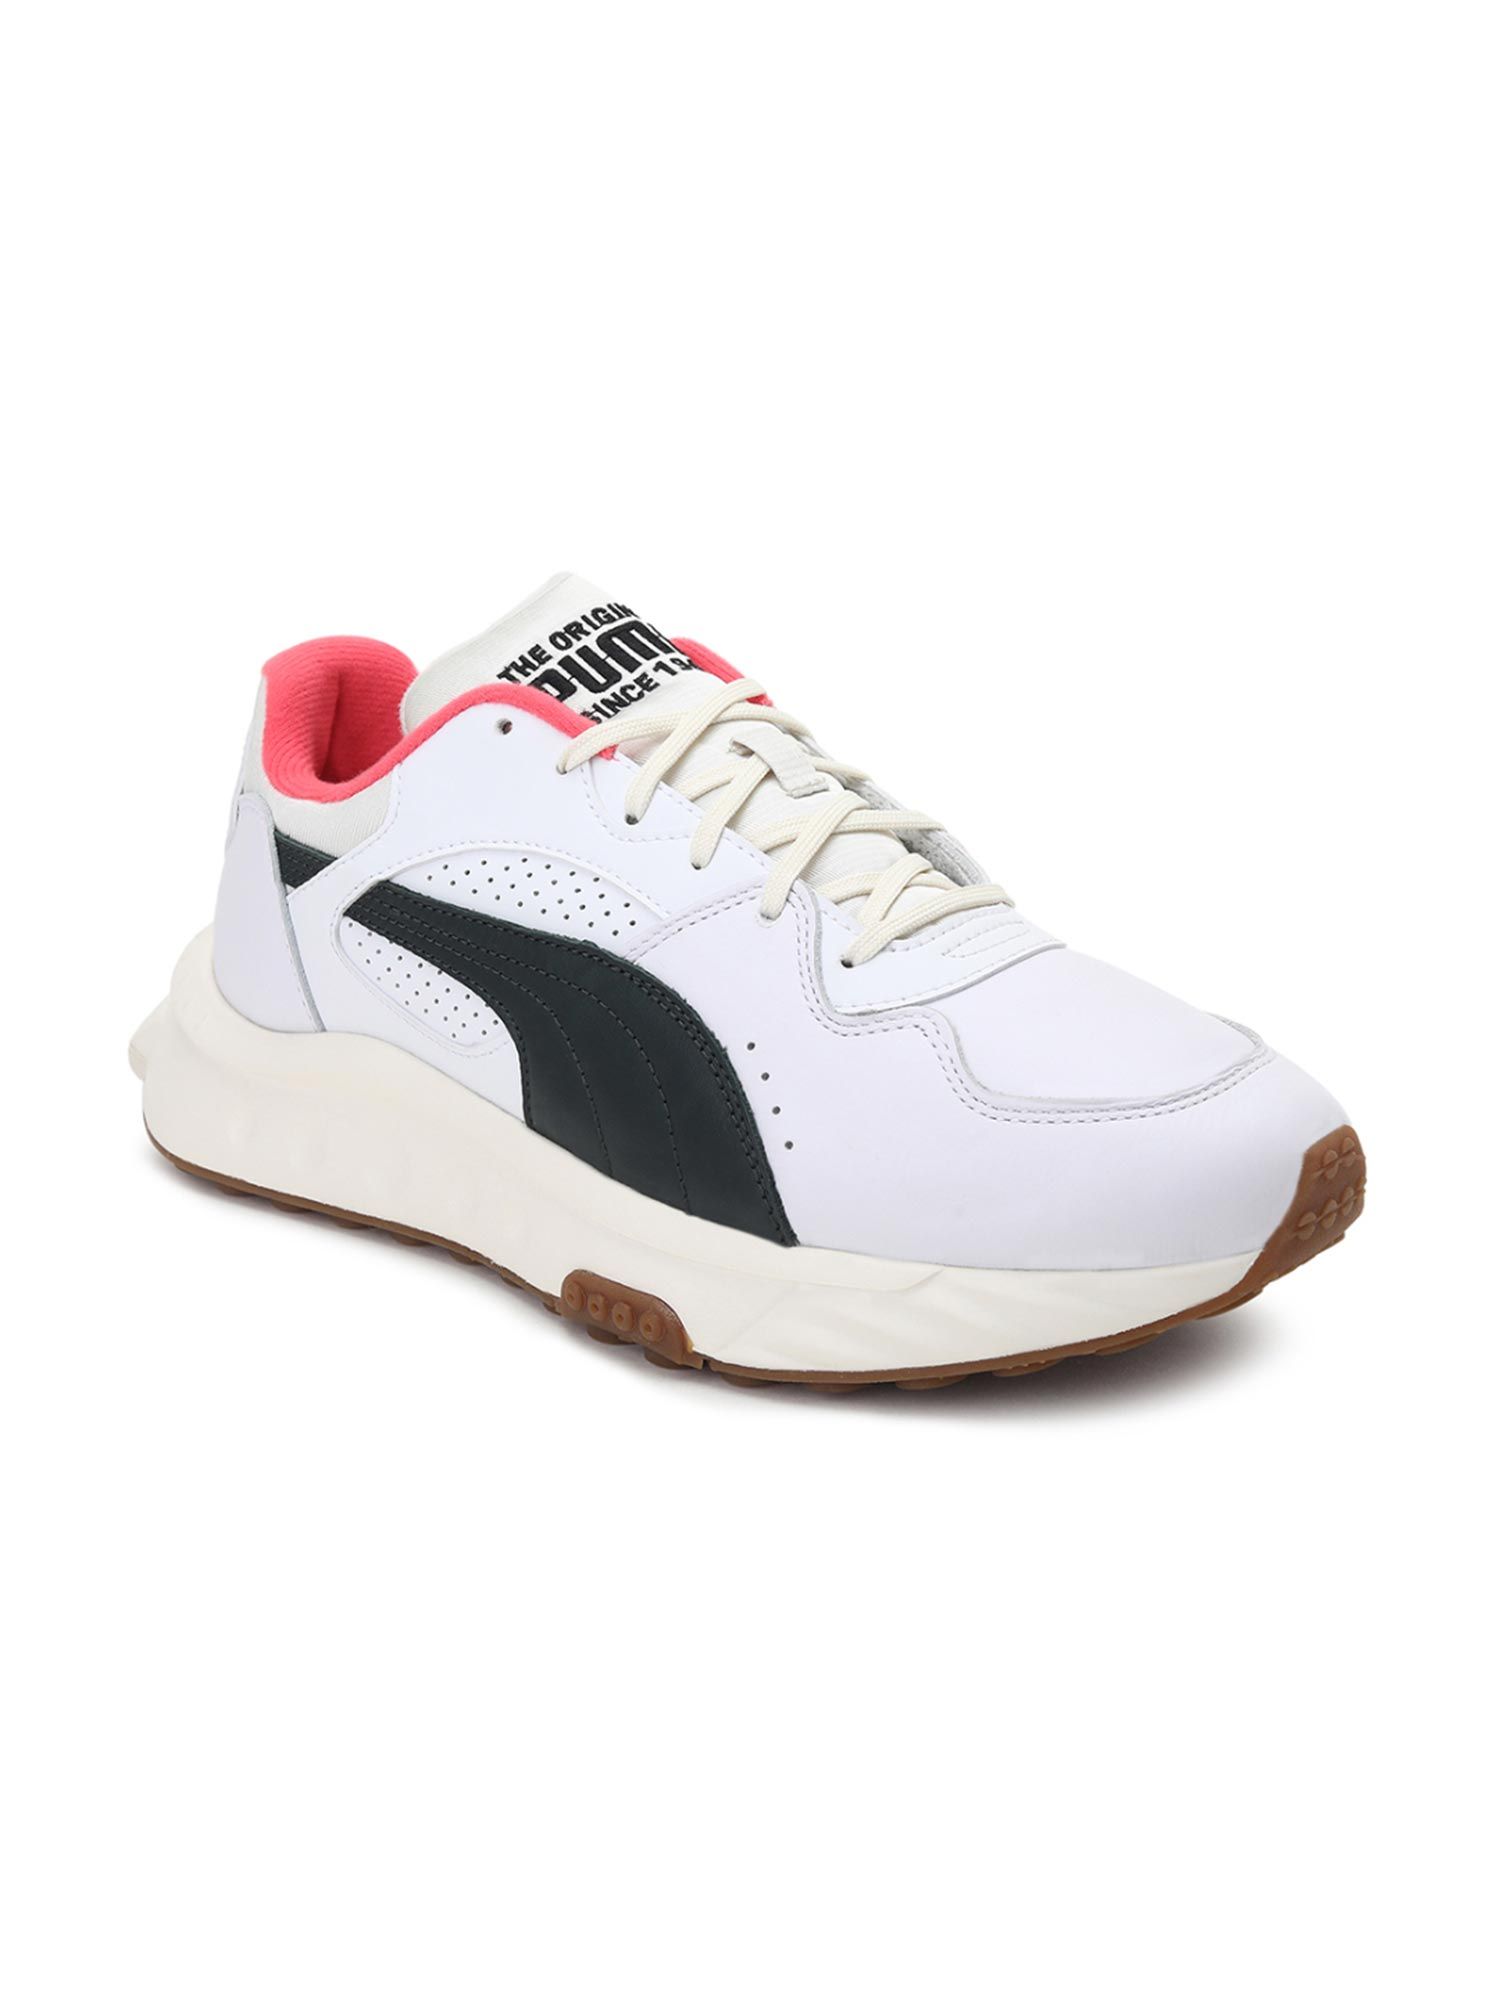 Puma Wild Rider PxP Unisex White Sneakers (UK 7)